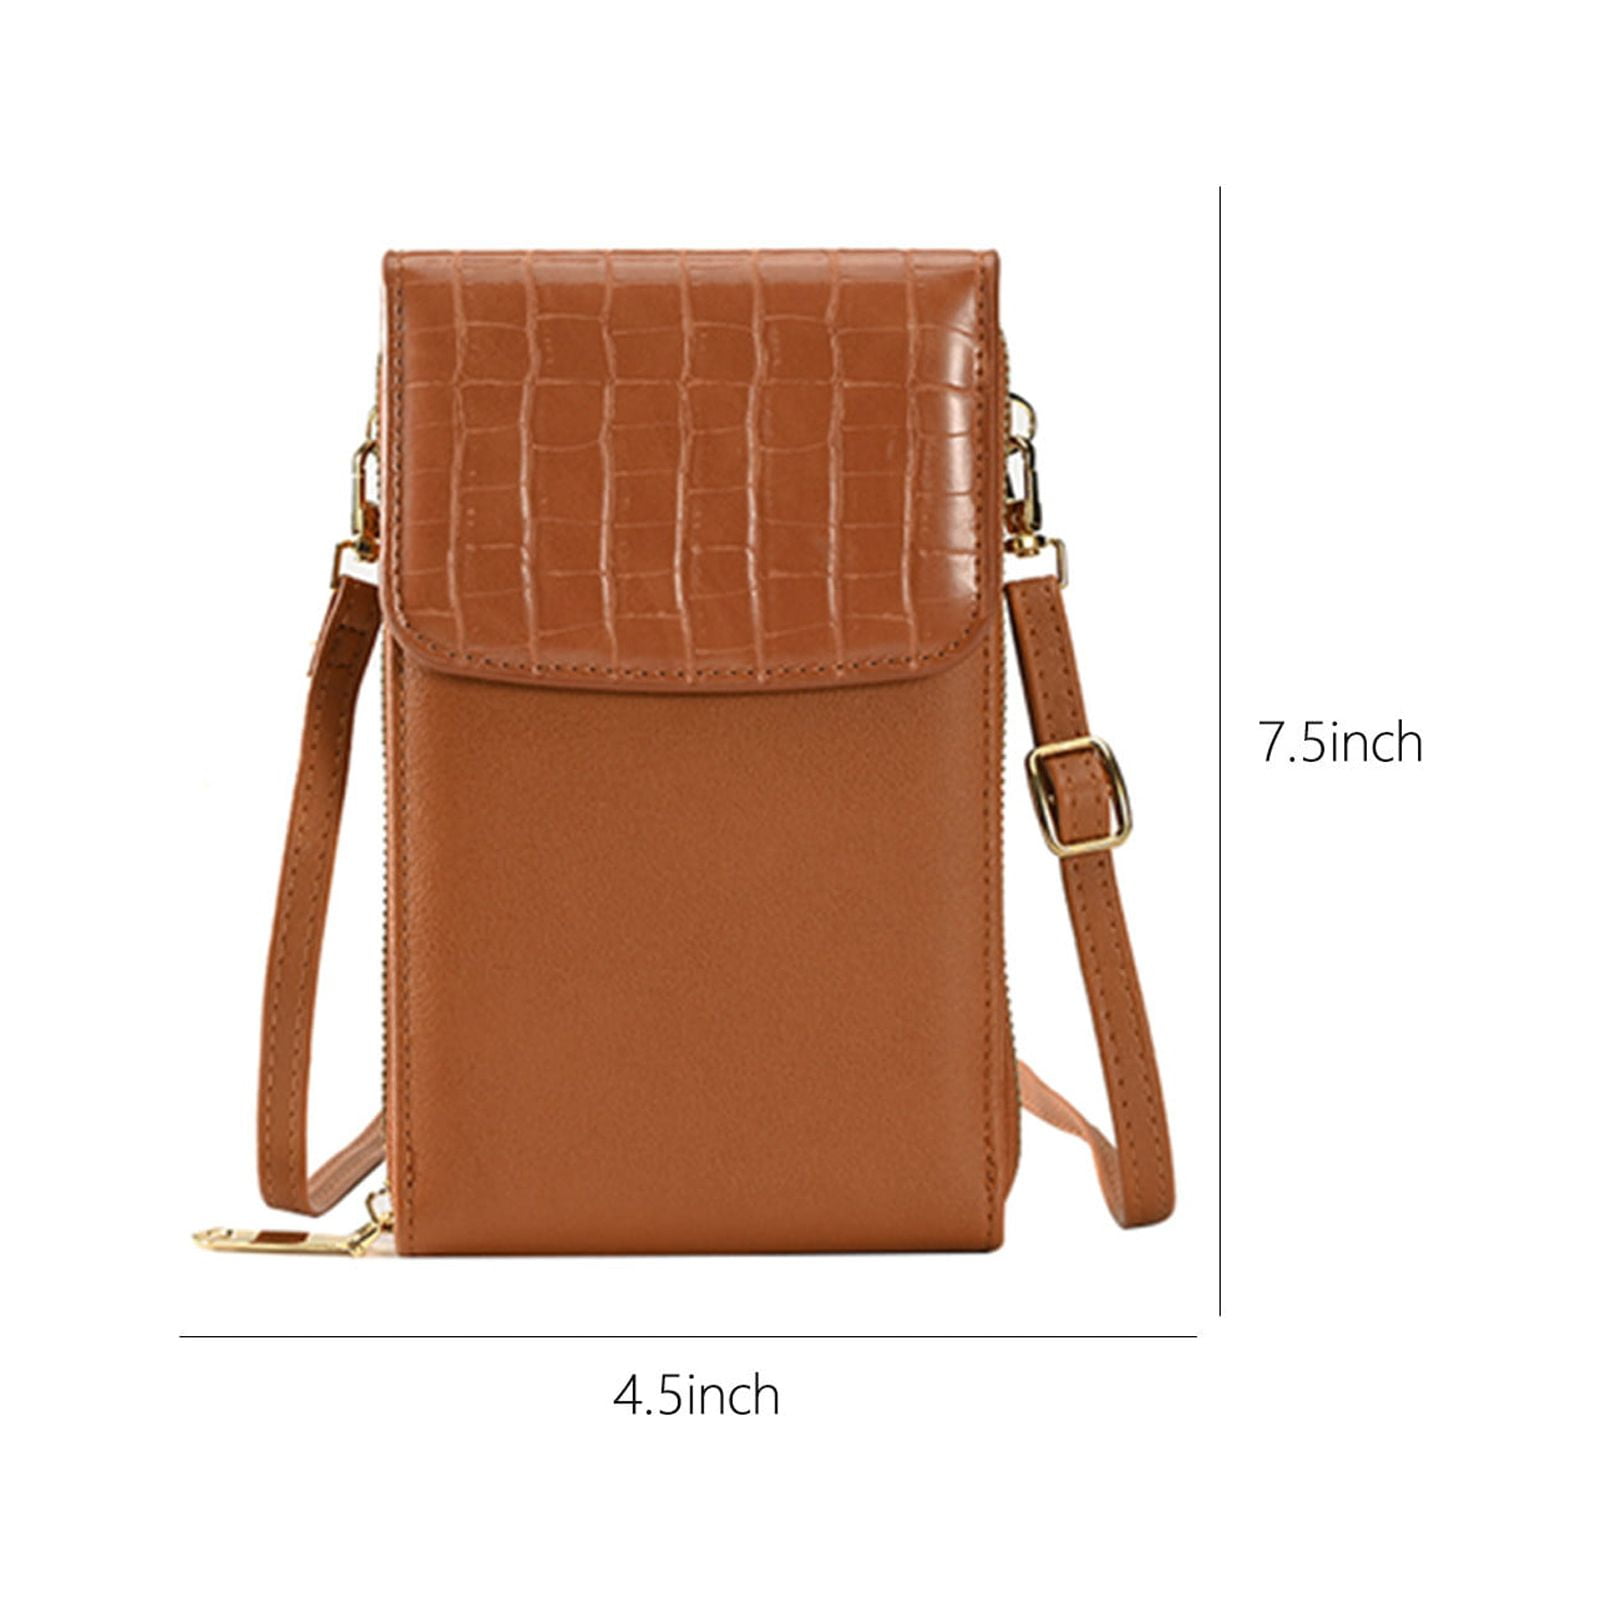 Buy Babli Velvet Sling bag | Ladies purse handbag |Latest Cross body sling  bag for Girls and women | Soft fabric stylis sling (LBH- 33x8x22) at  Amazon.in